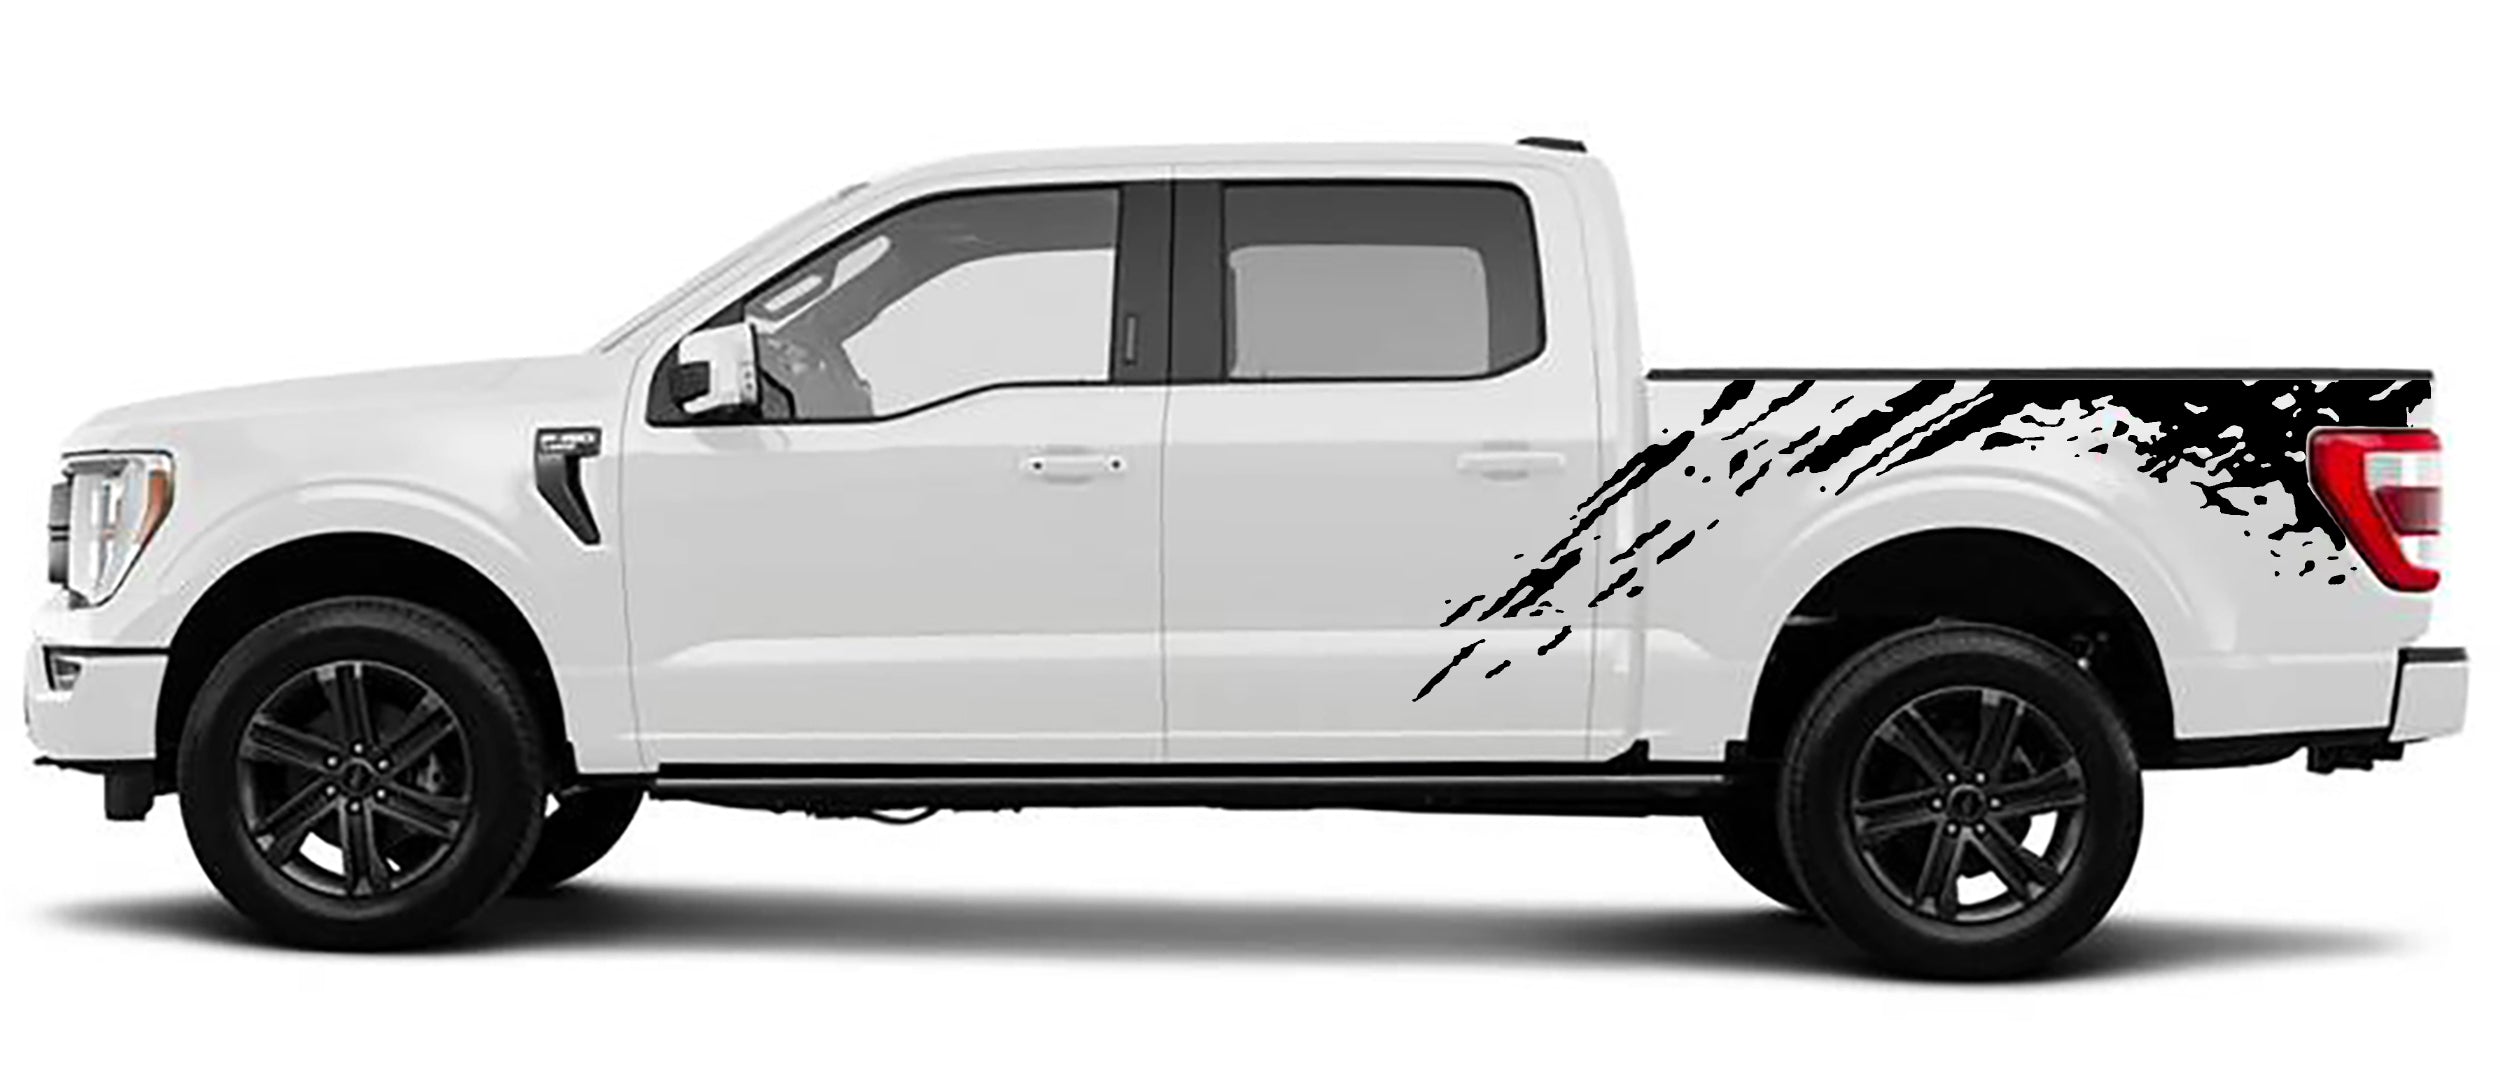 Ford F-150 Mud Splash Bed Decals (Pair) : Vinyl Graphics Kit Fits (2021-2023)